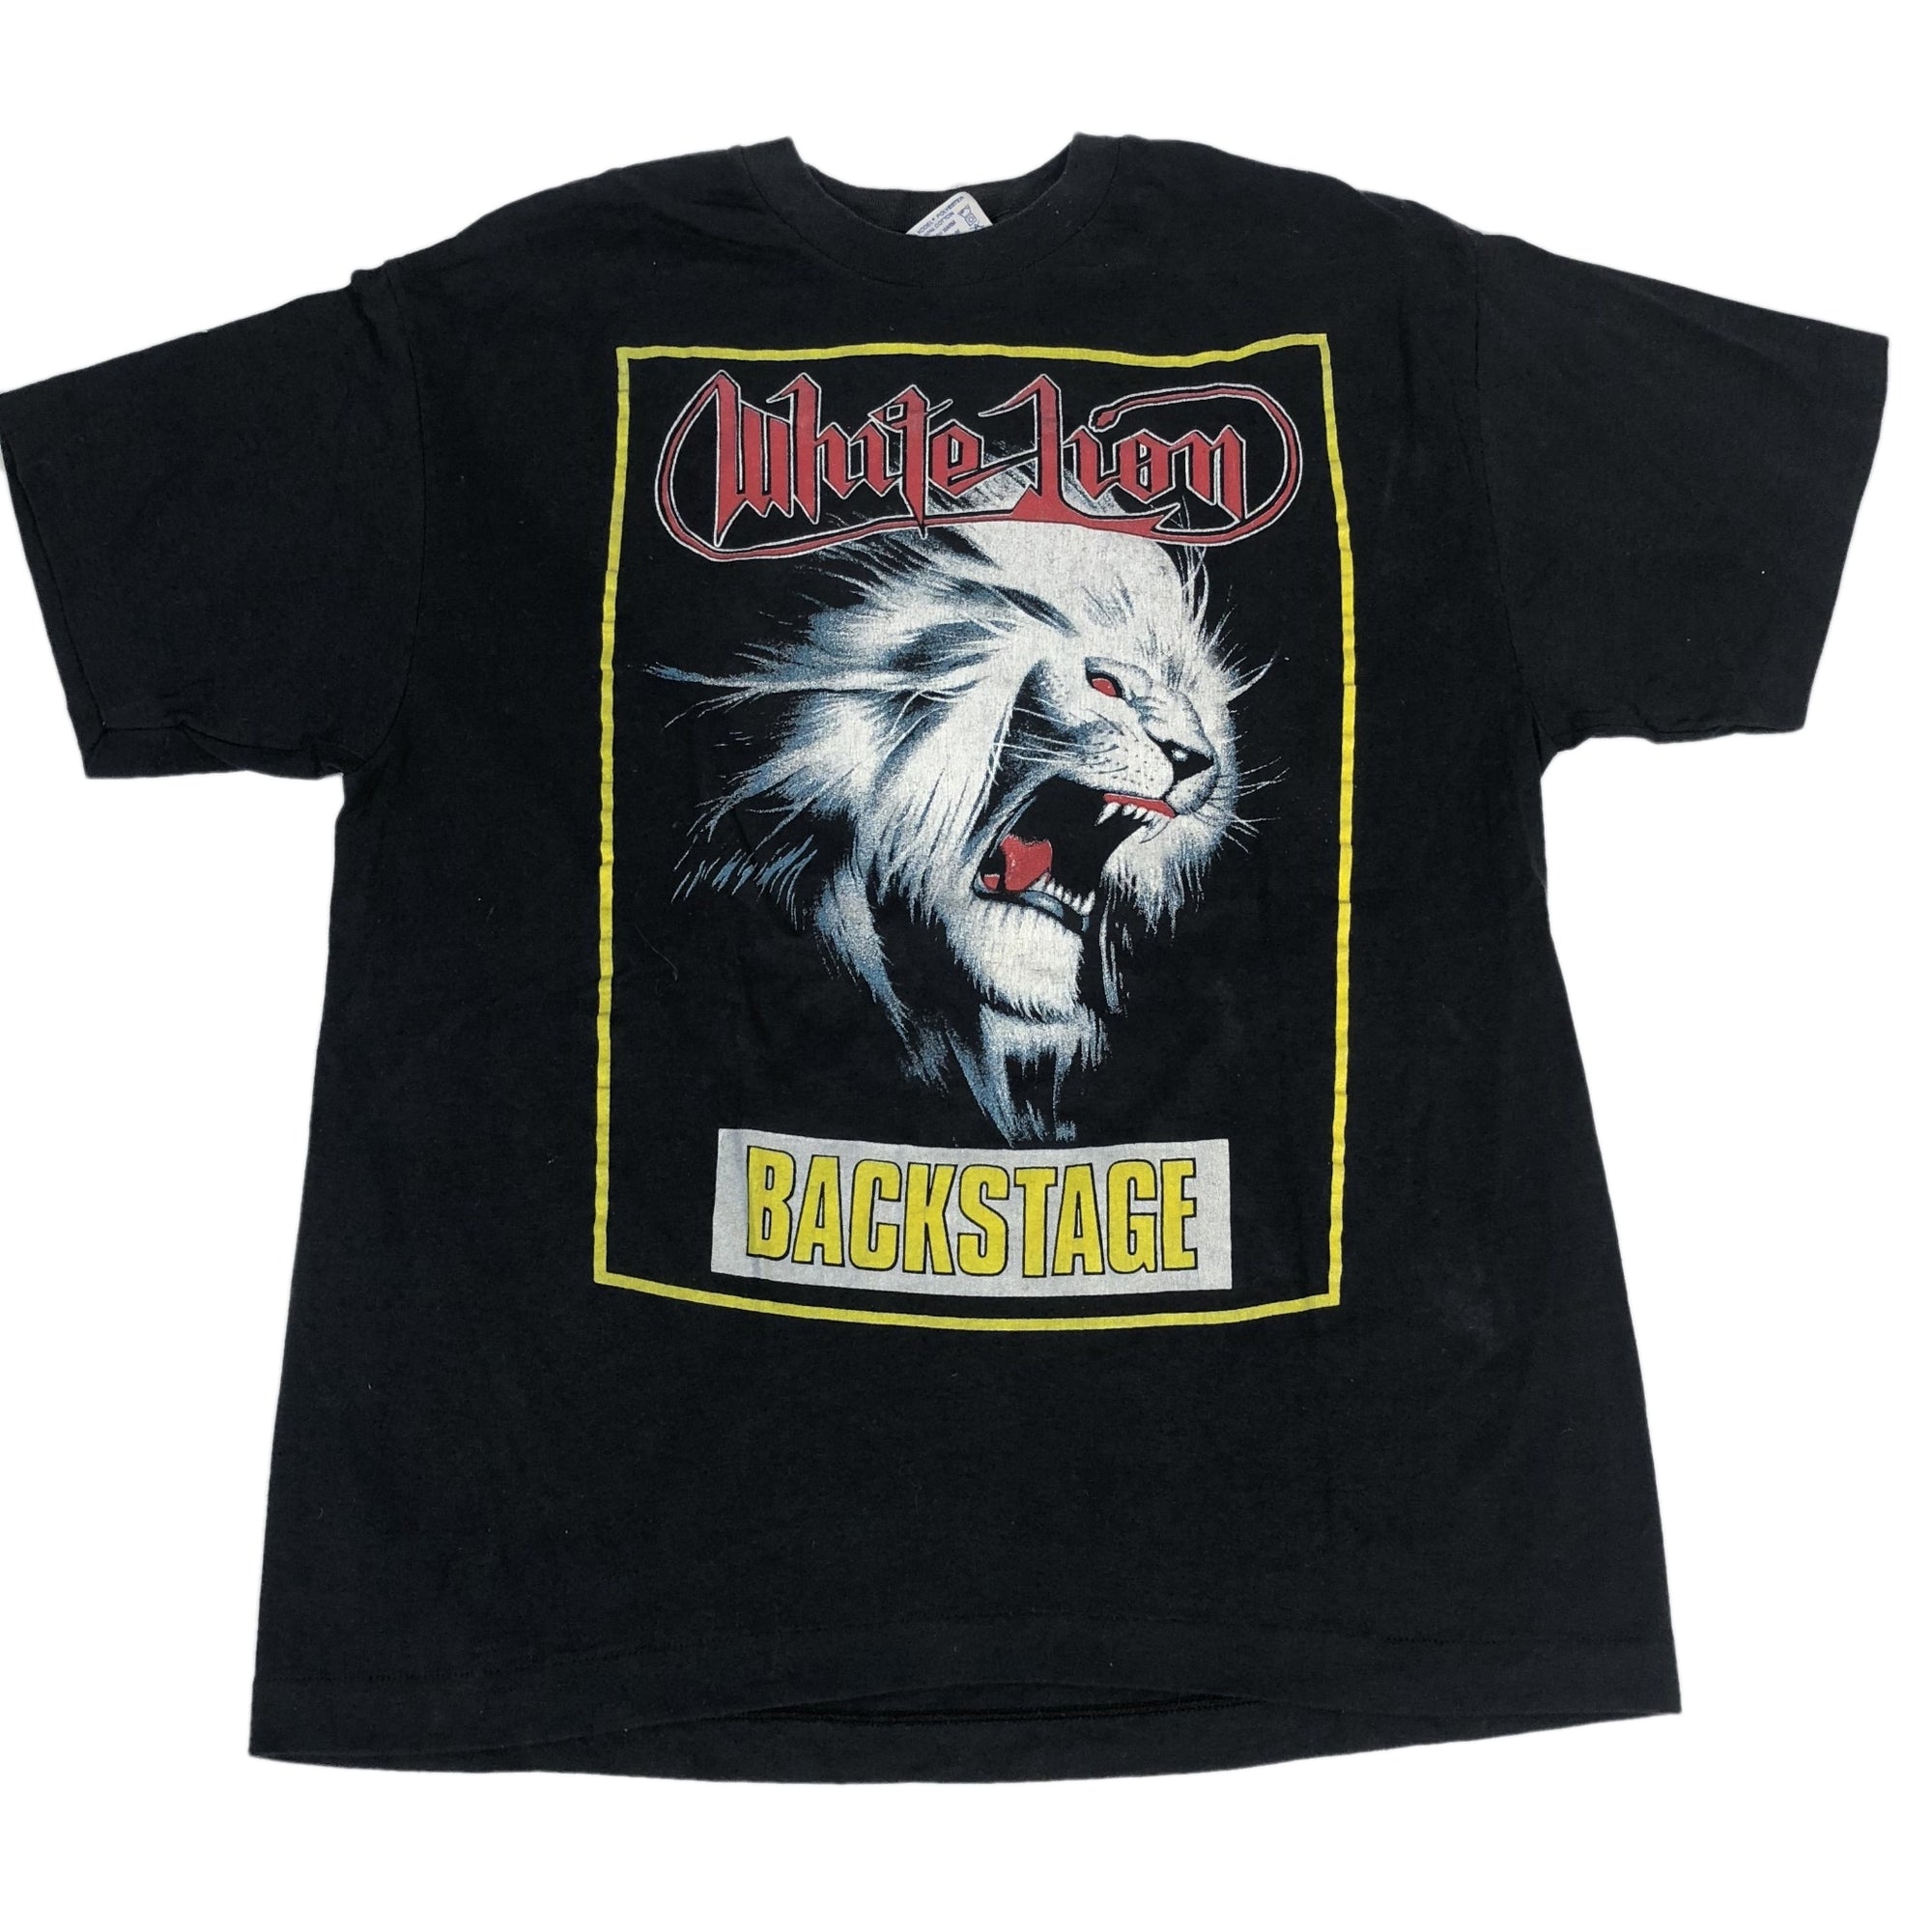 Vintage White Lion "Backstage" T-Shirt - jointcustodydc